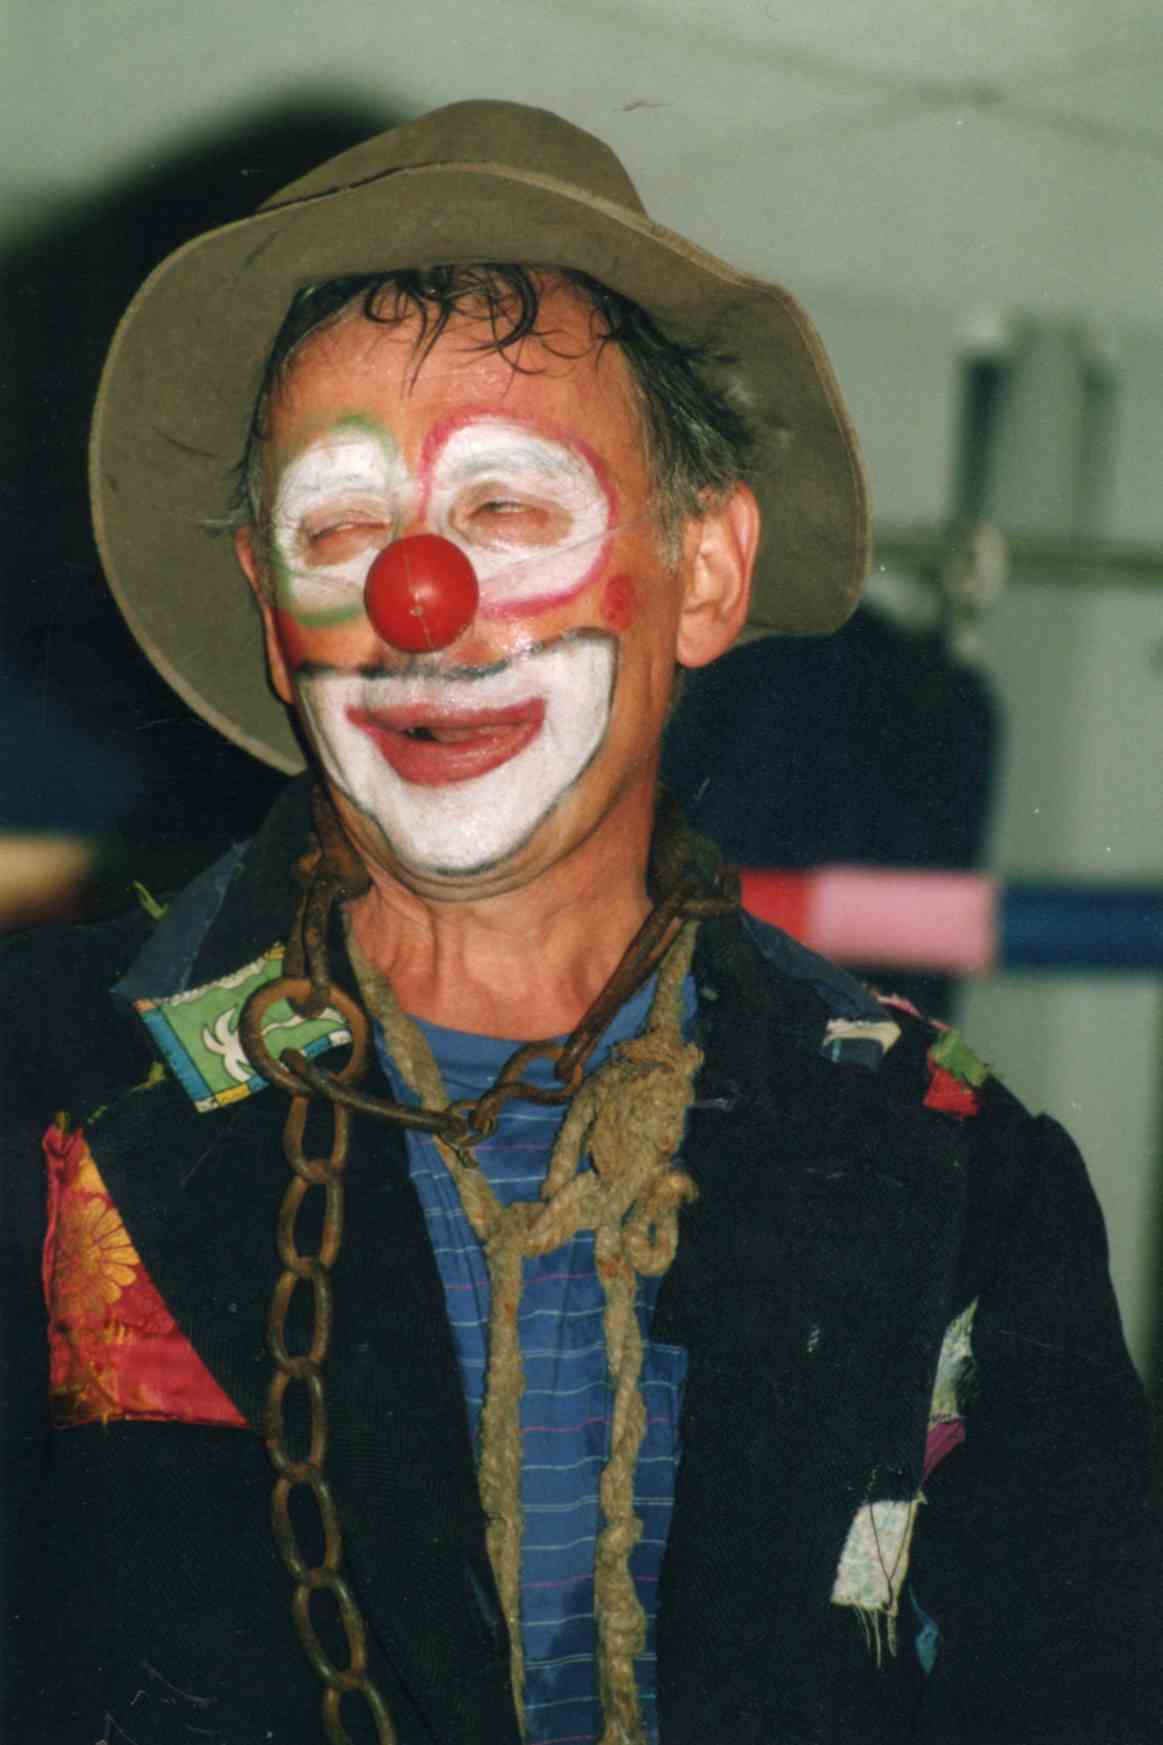 clown.agricole